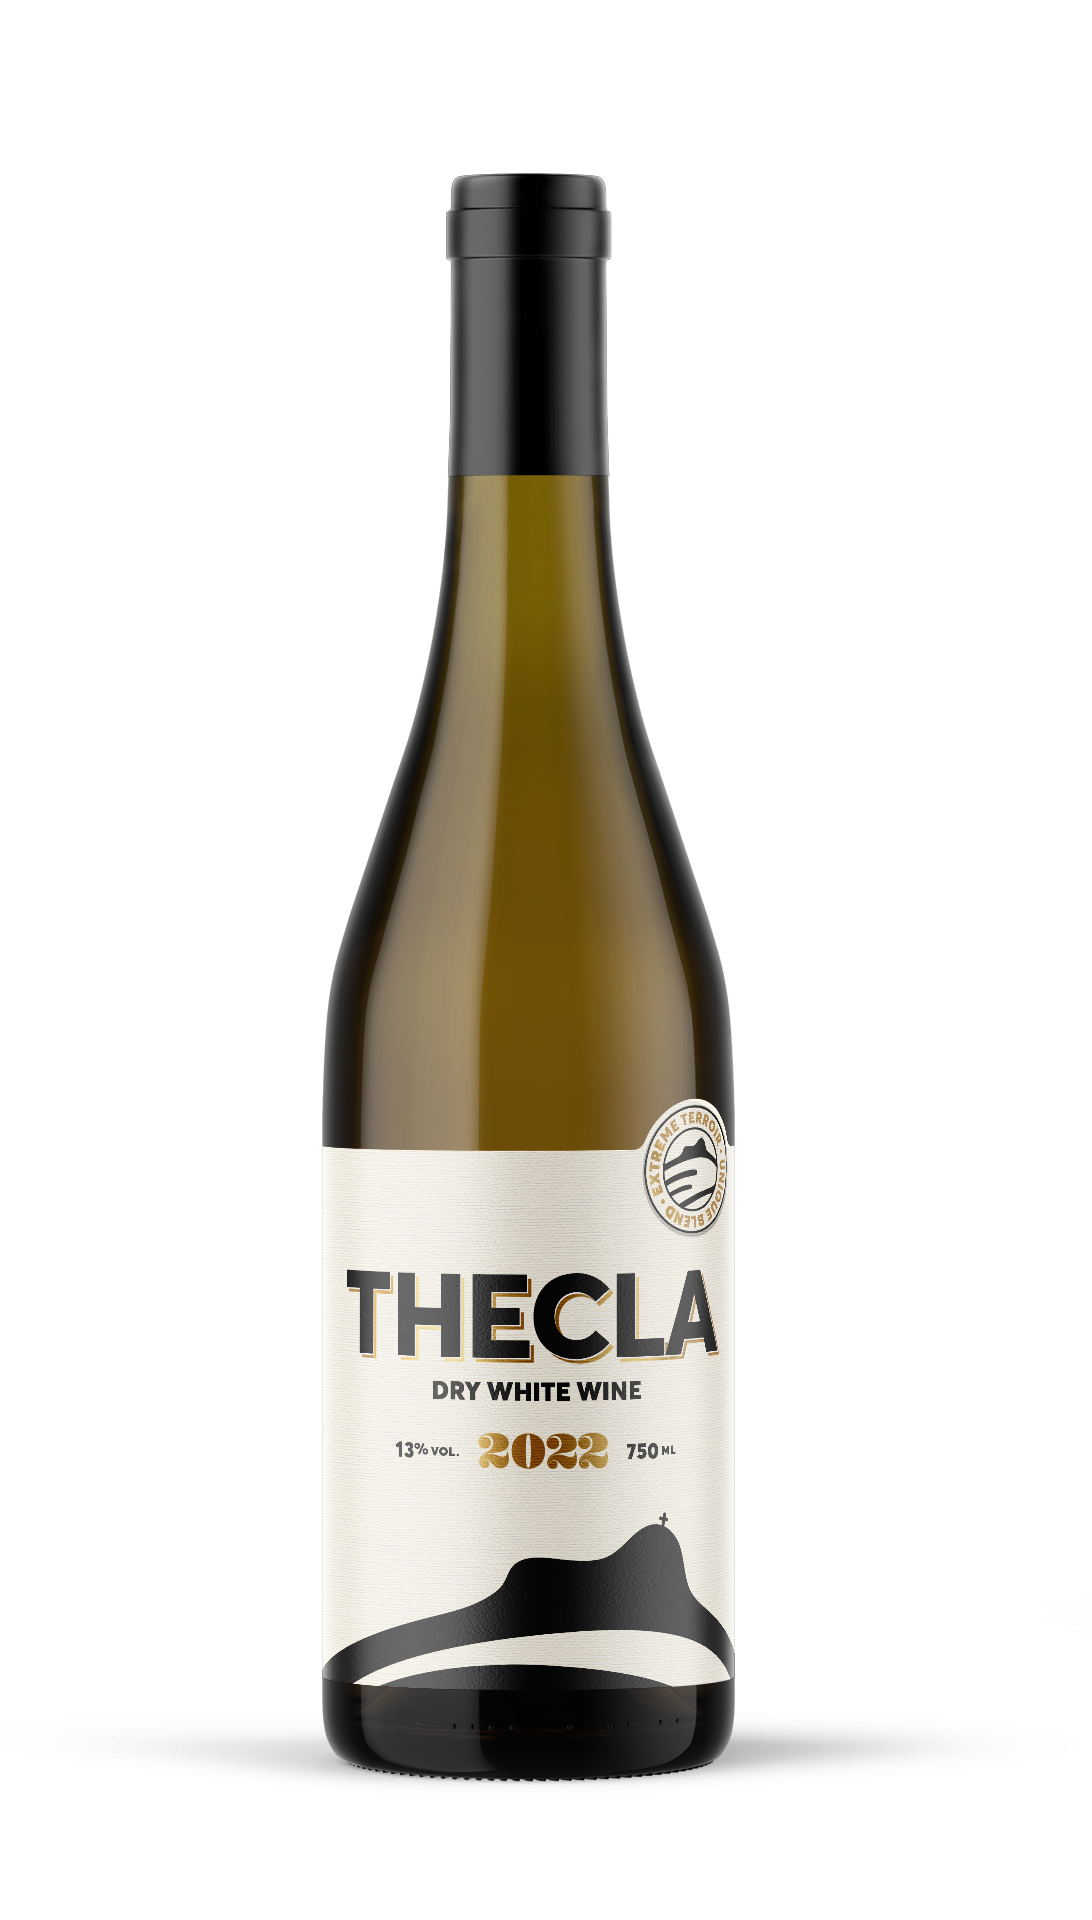 Thecla dry white wine harvest 2022